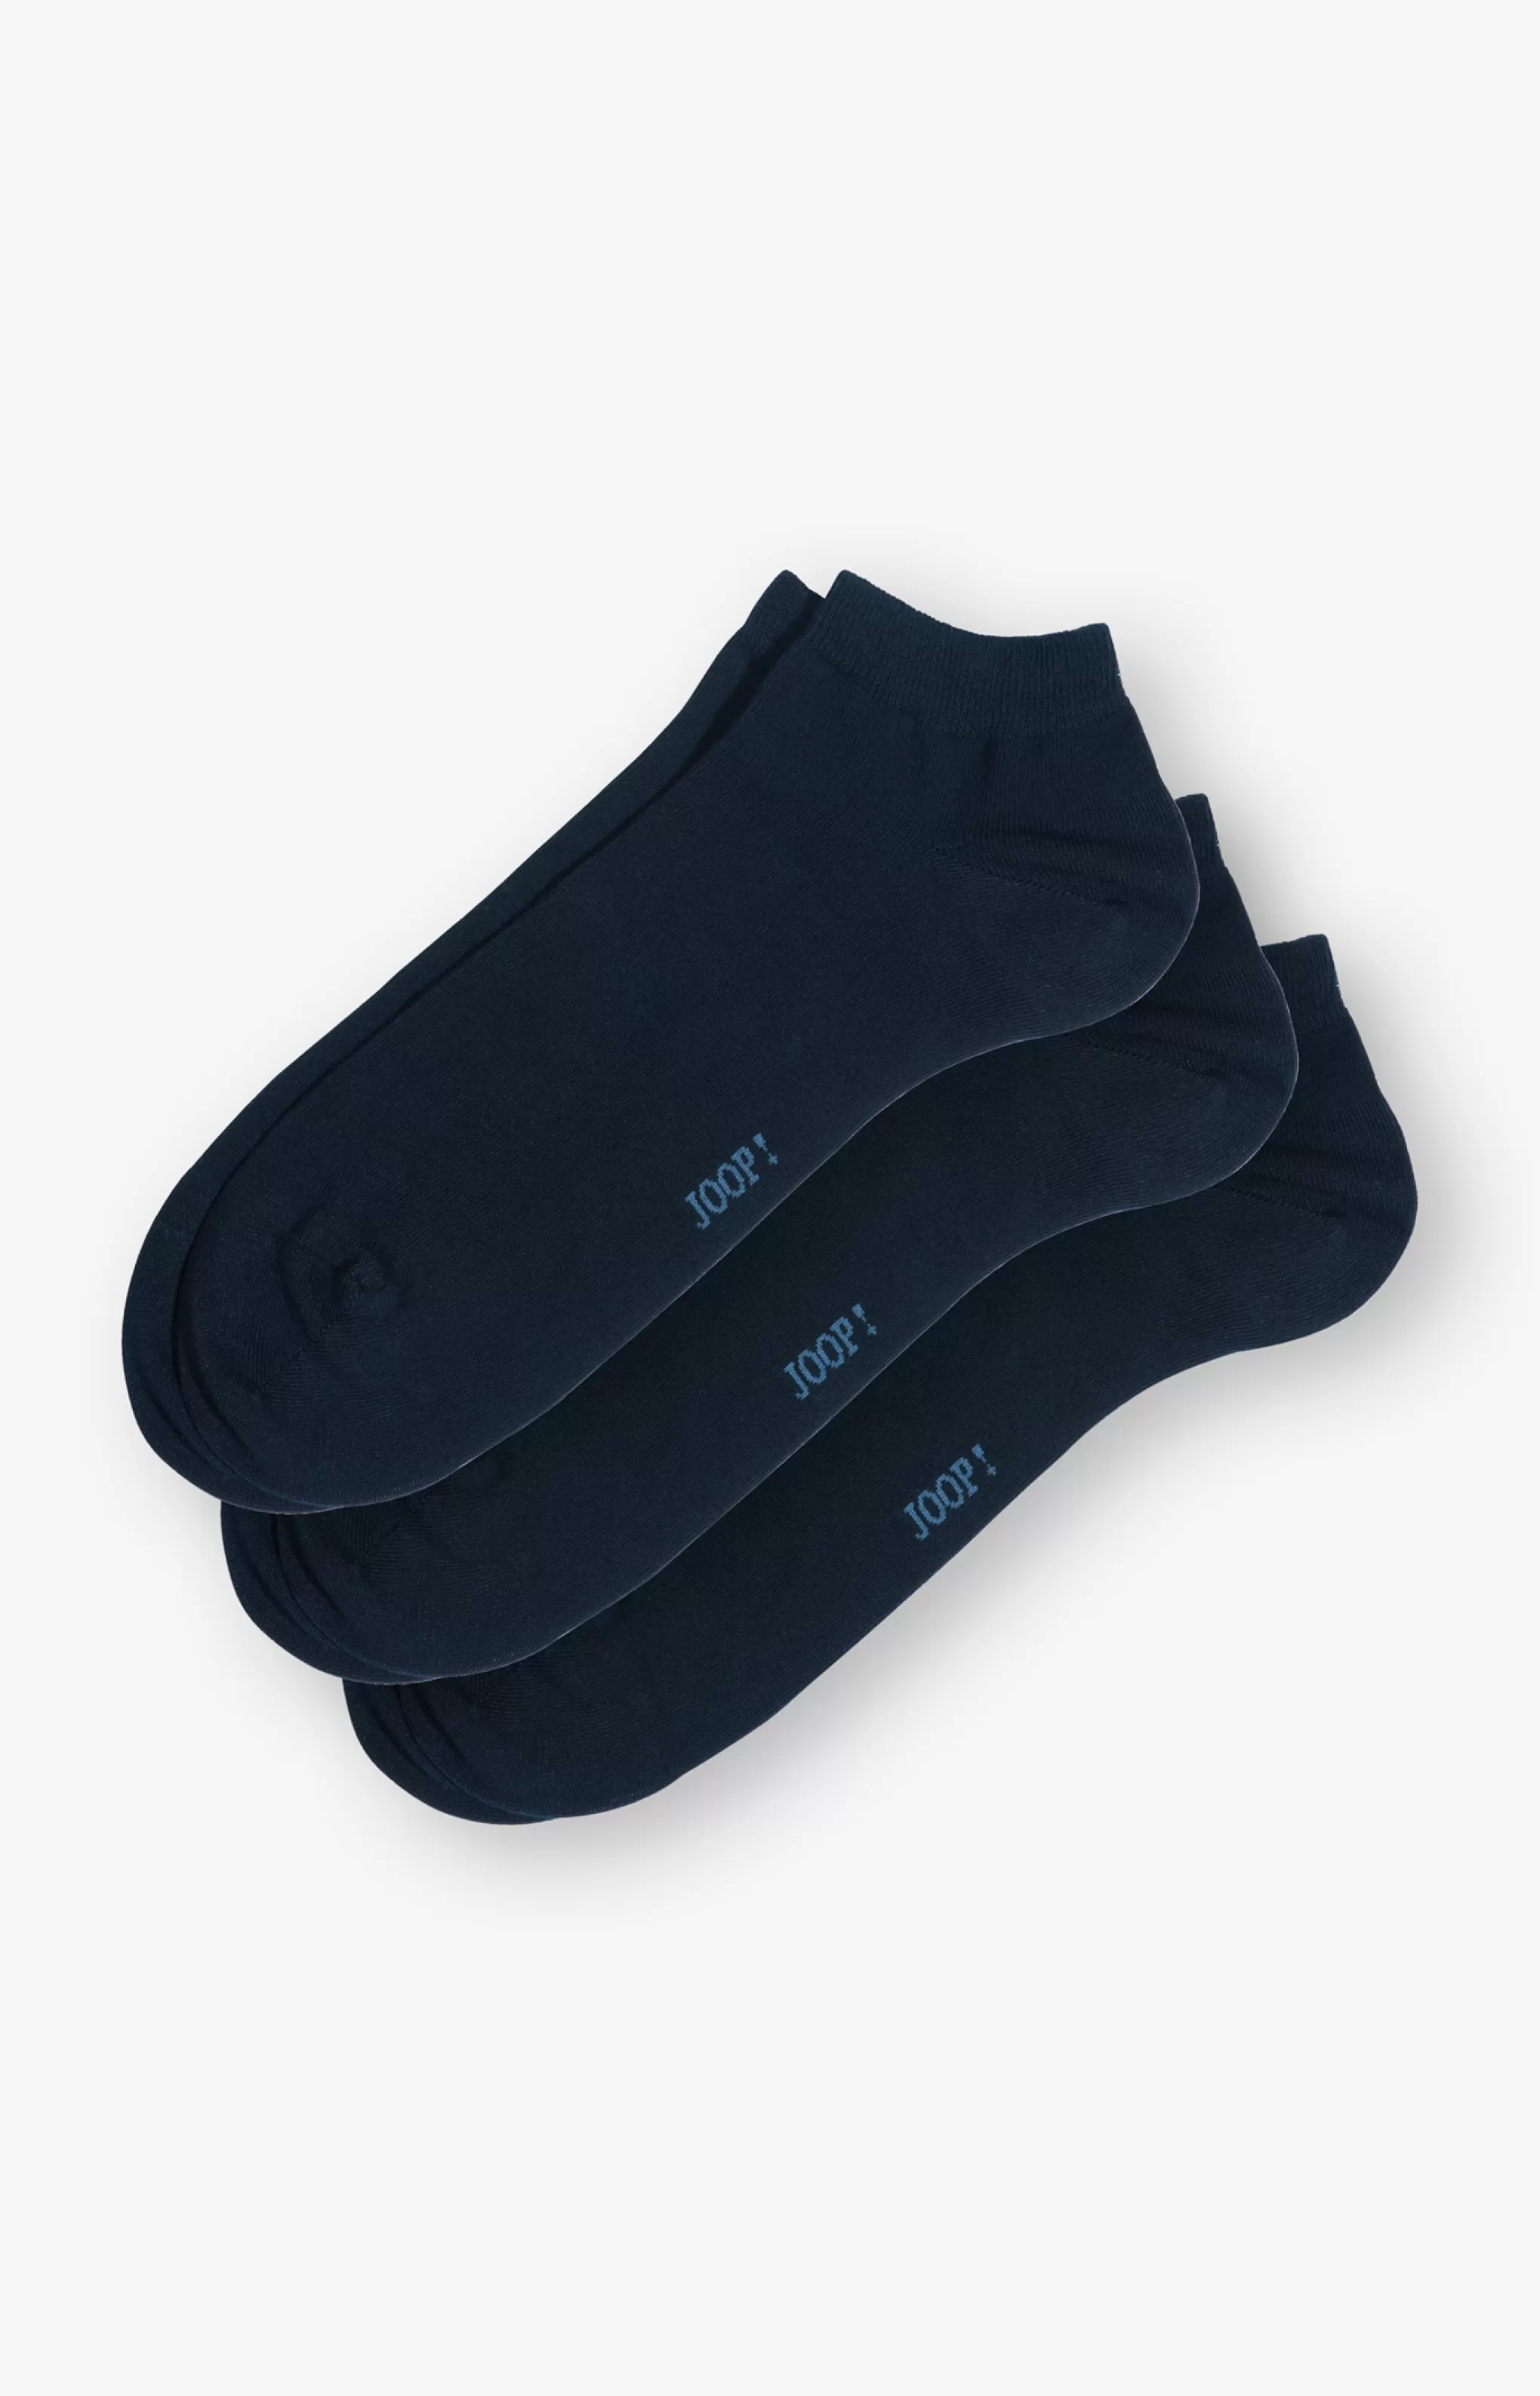 Socks*JOOP Socks Nautical 3-pack trainer socks